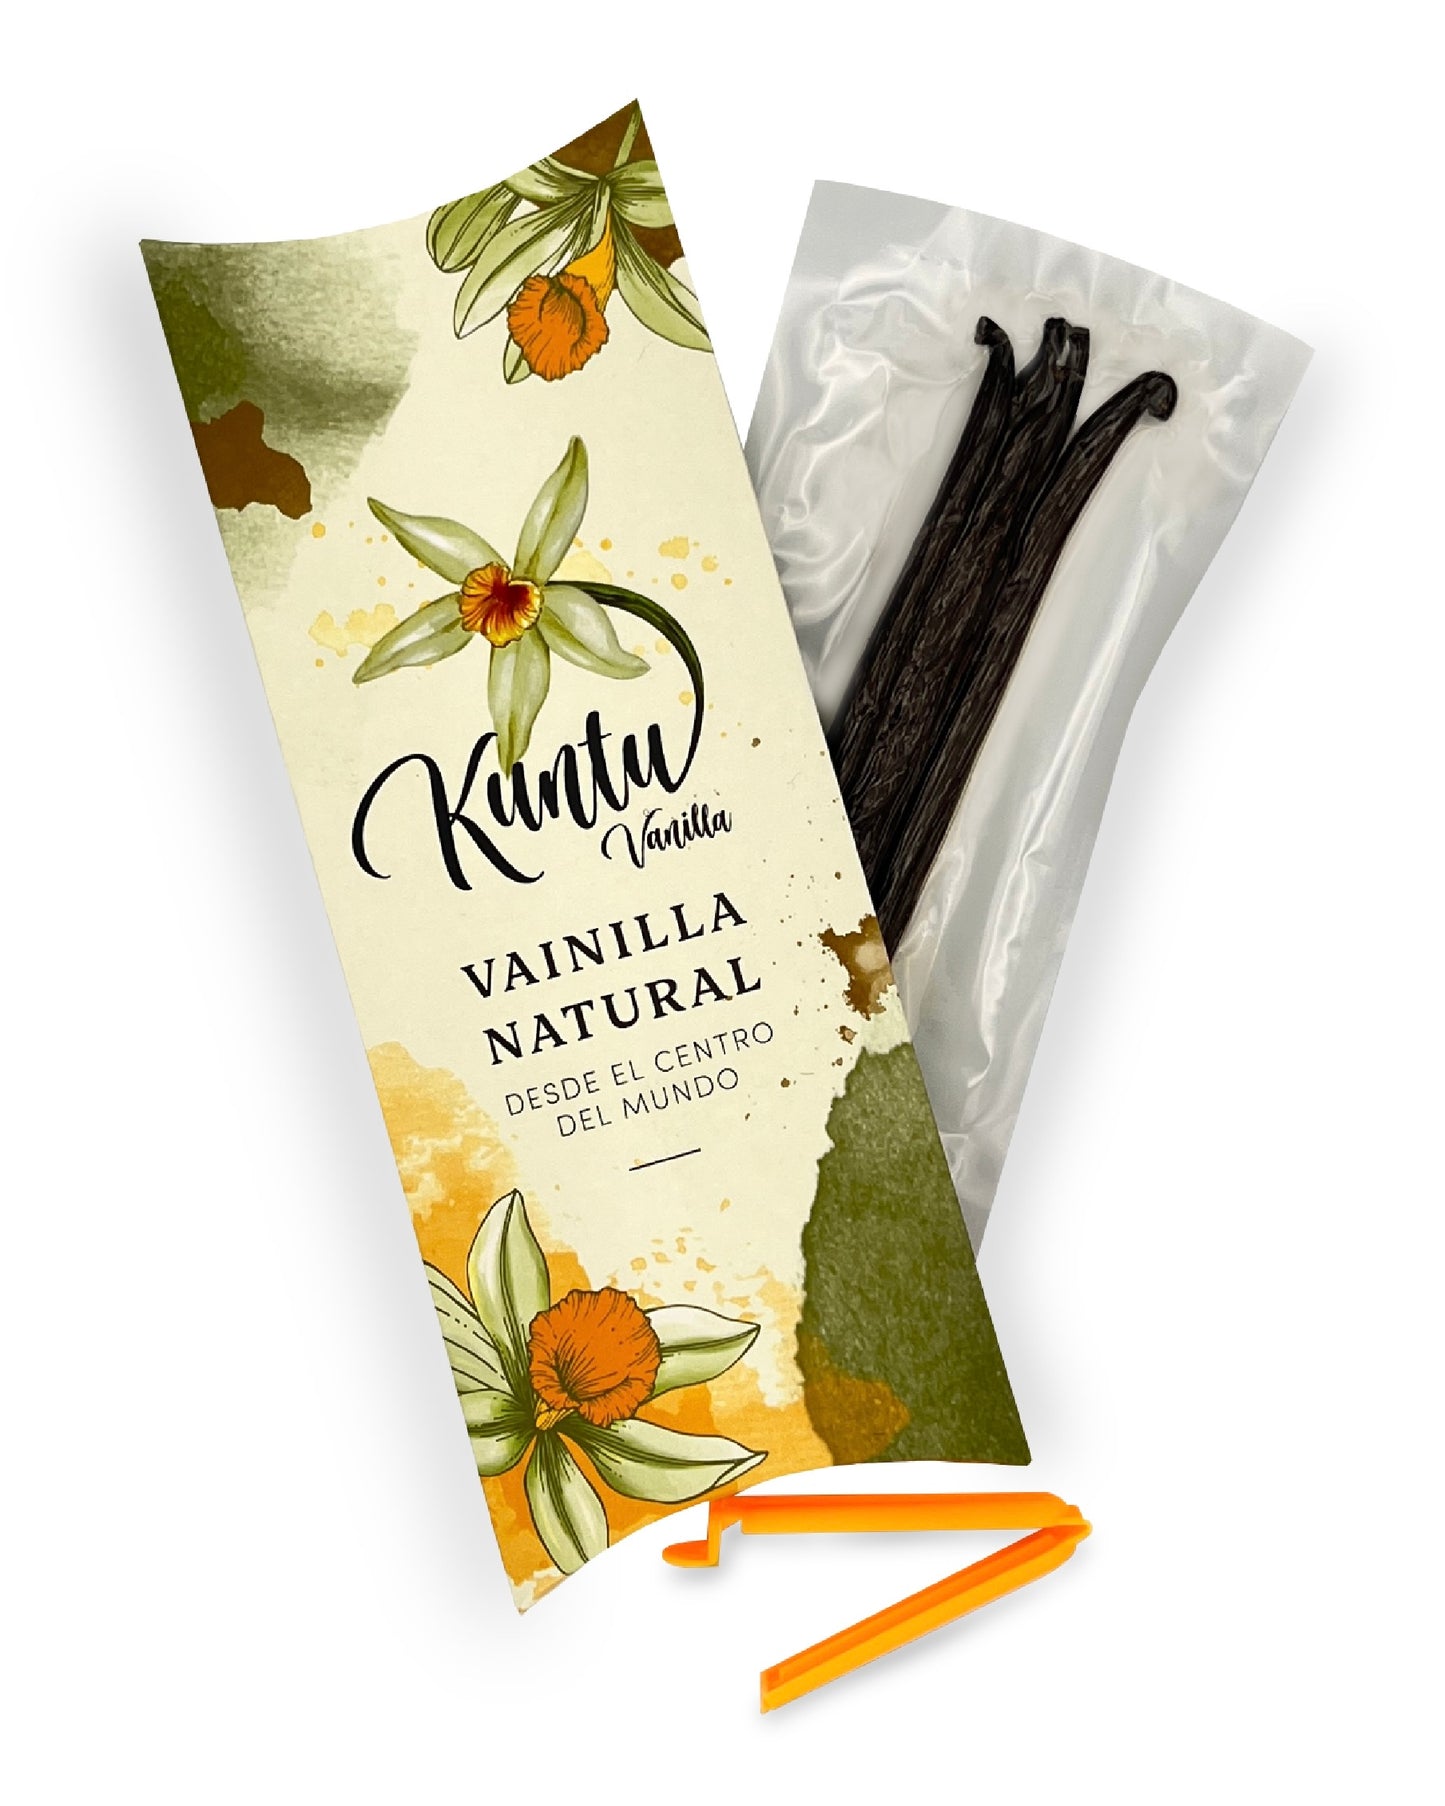 20g (5-6 pieces) gourmet vanilla beans grade A (15-18cm) vacuum packed